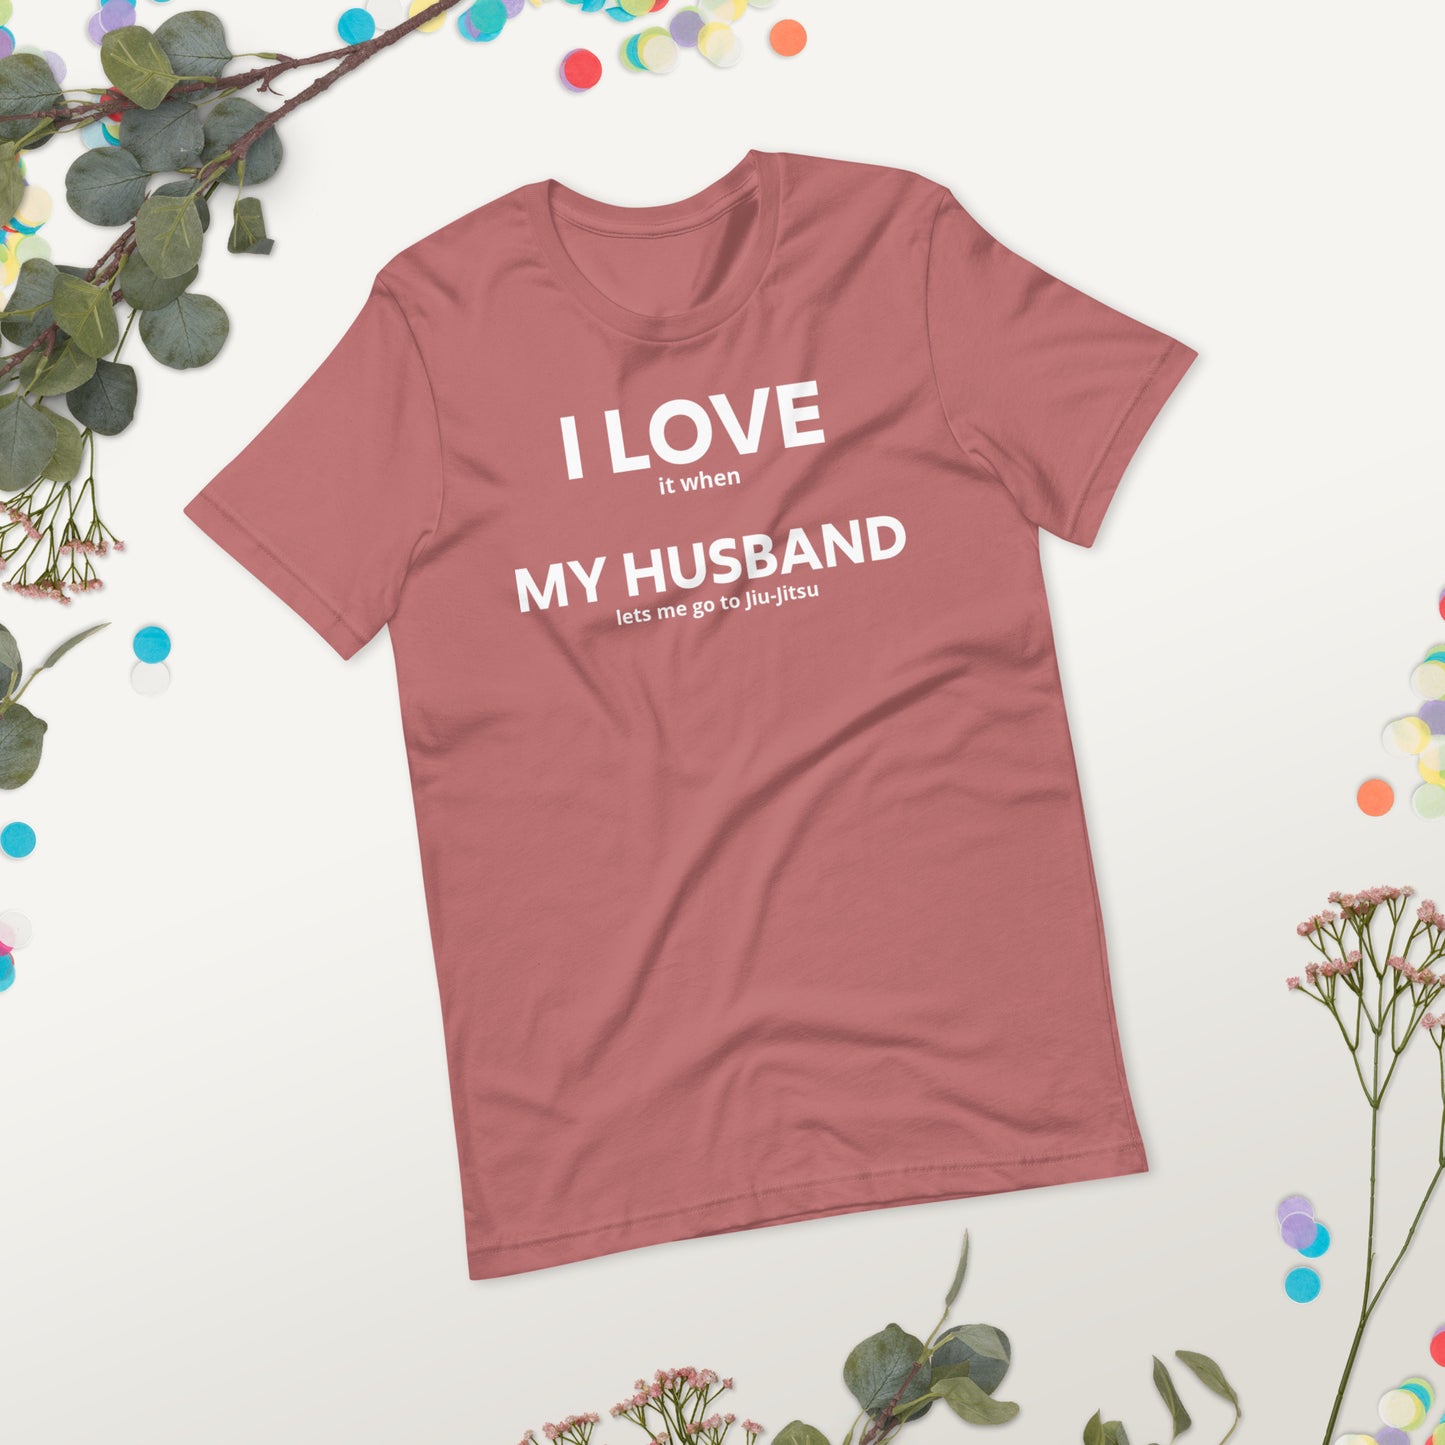 I LOVE MY HUSBAND t-shirt